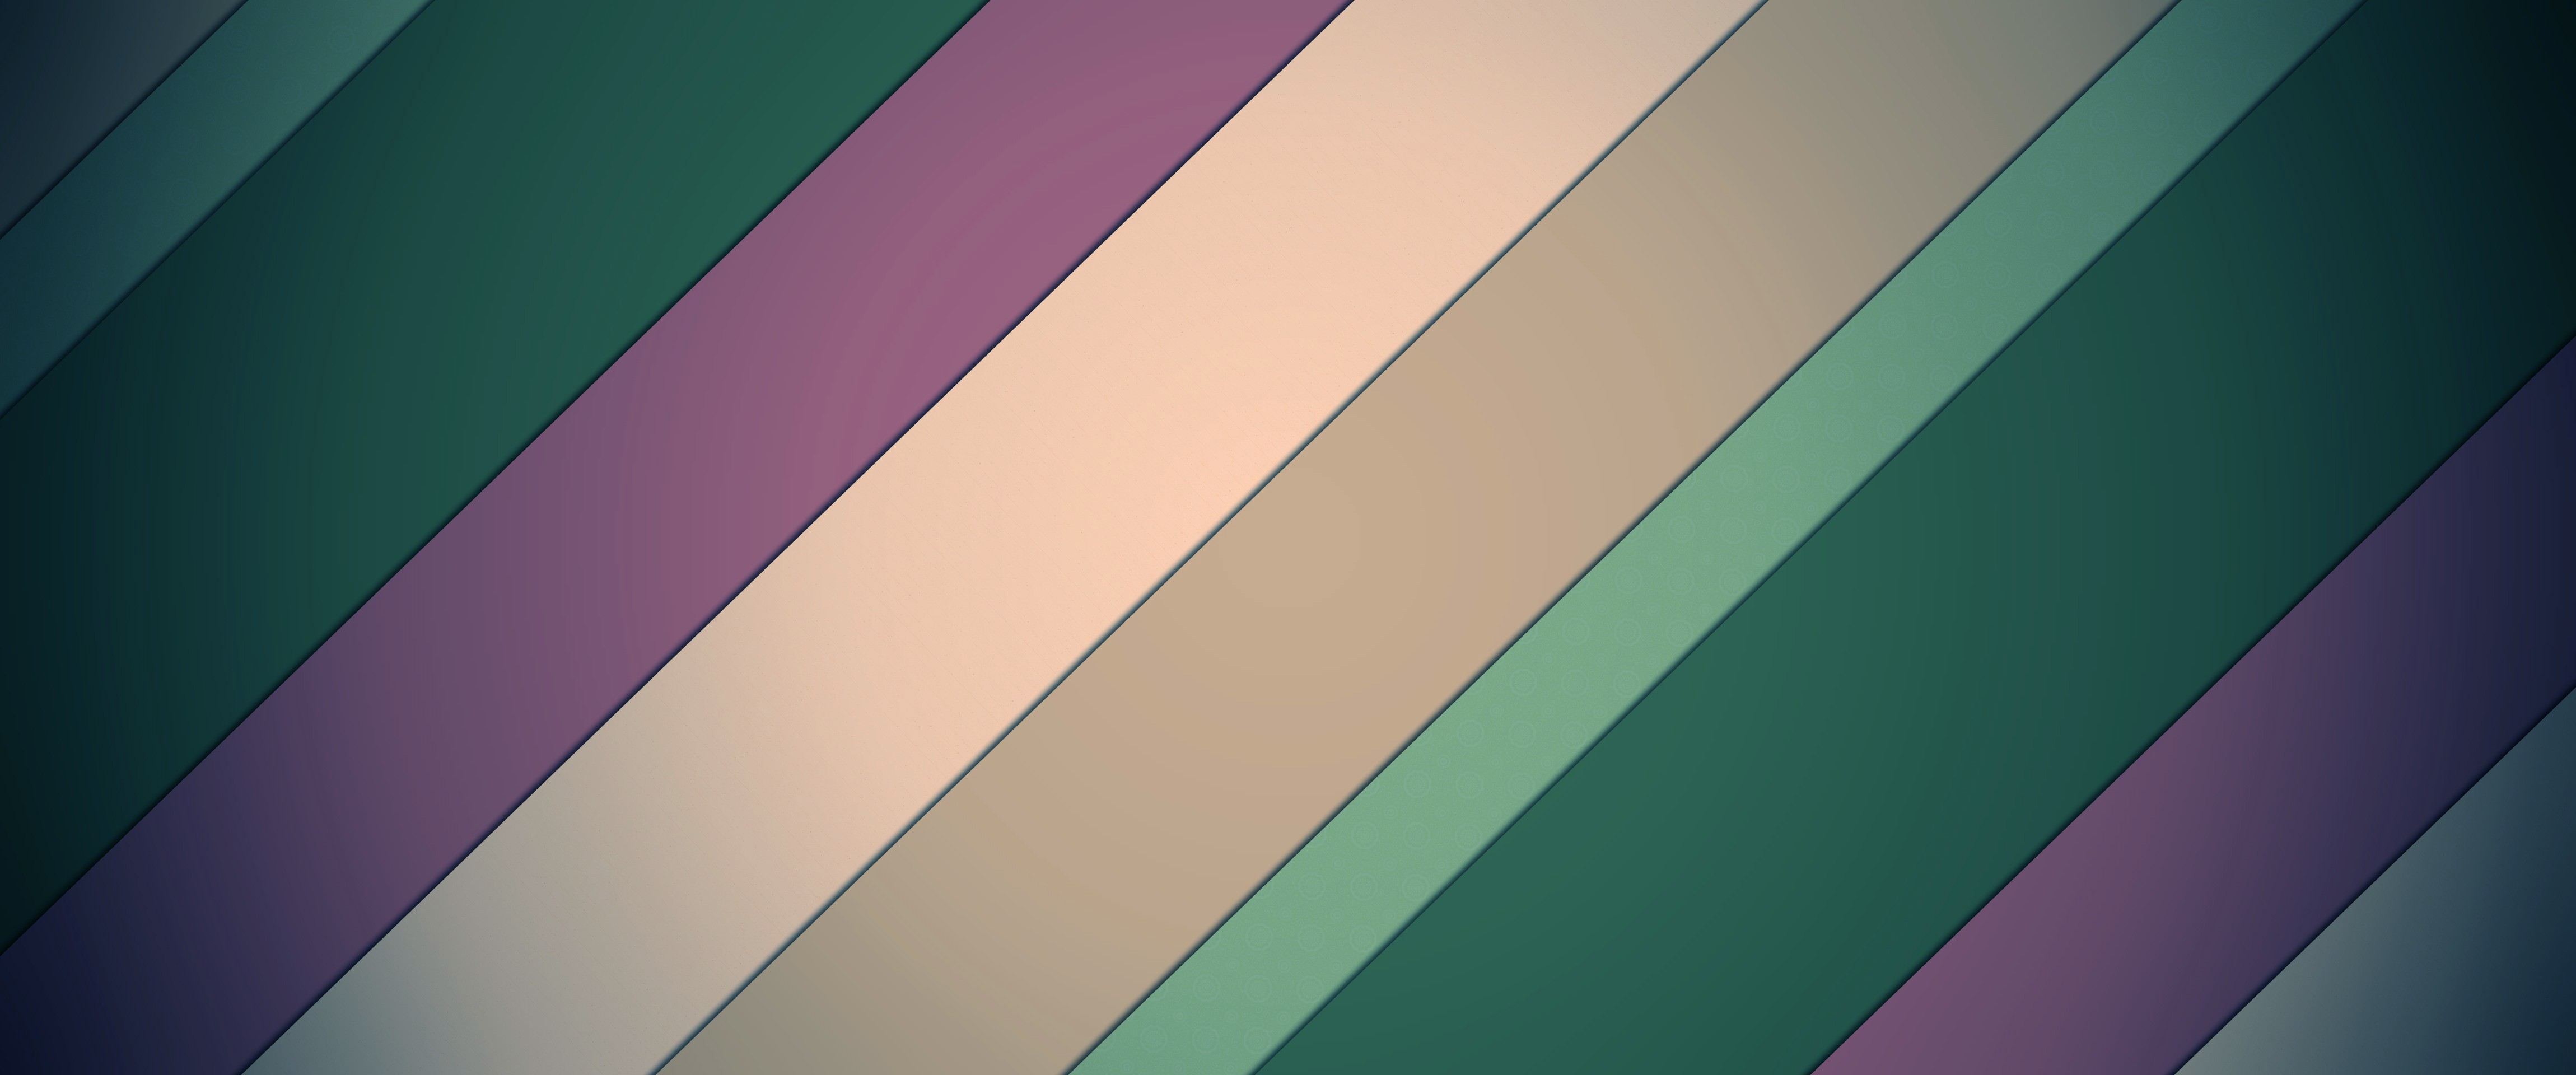 Lines Pink Green Texture Mobile Desktop Free Hd Wallpaper